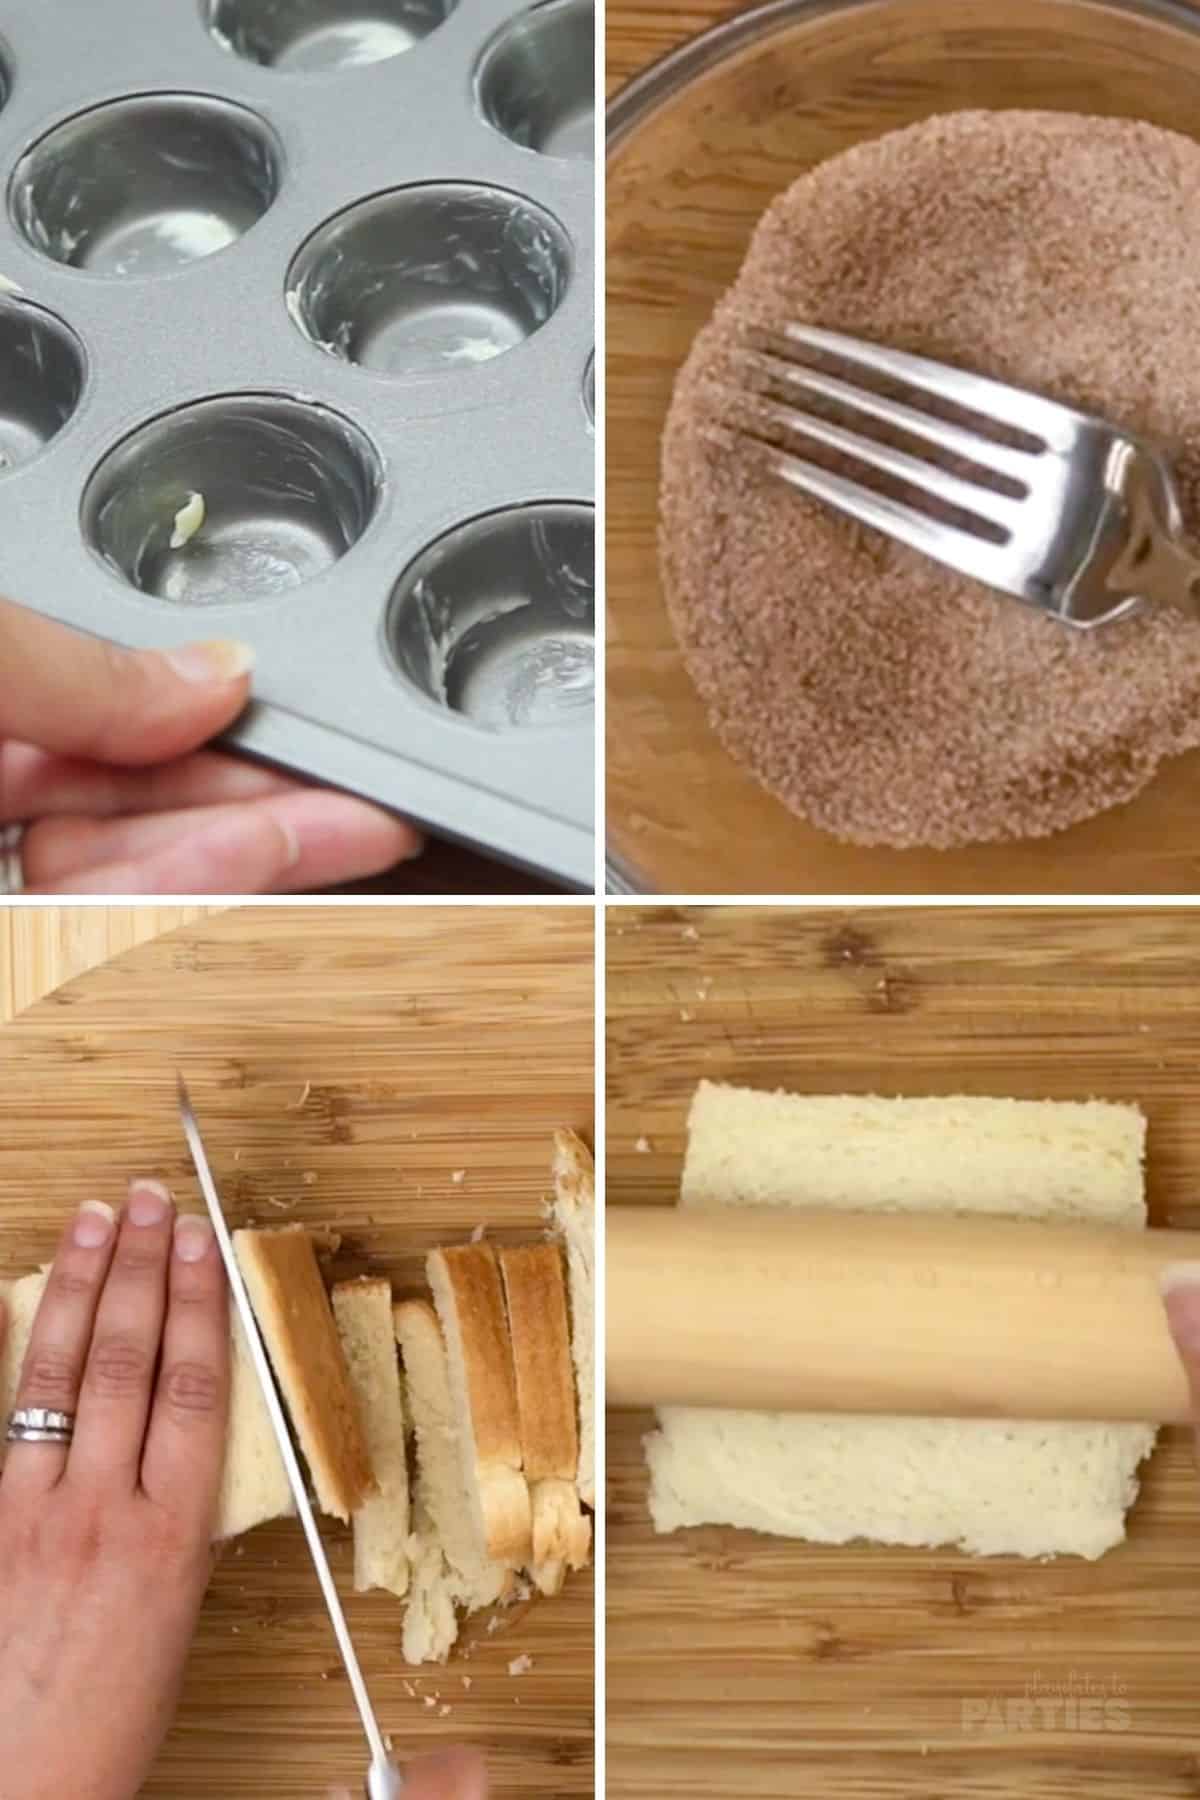 How to make mini cinnamon bites steps 1-4.